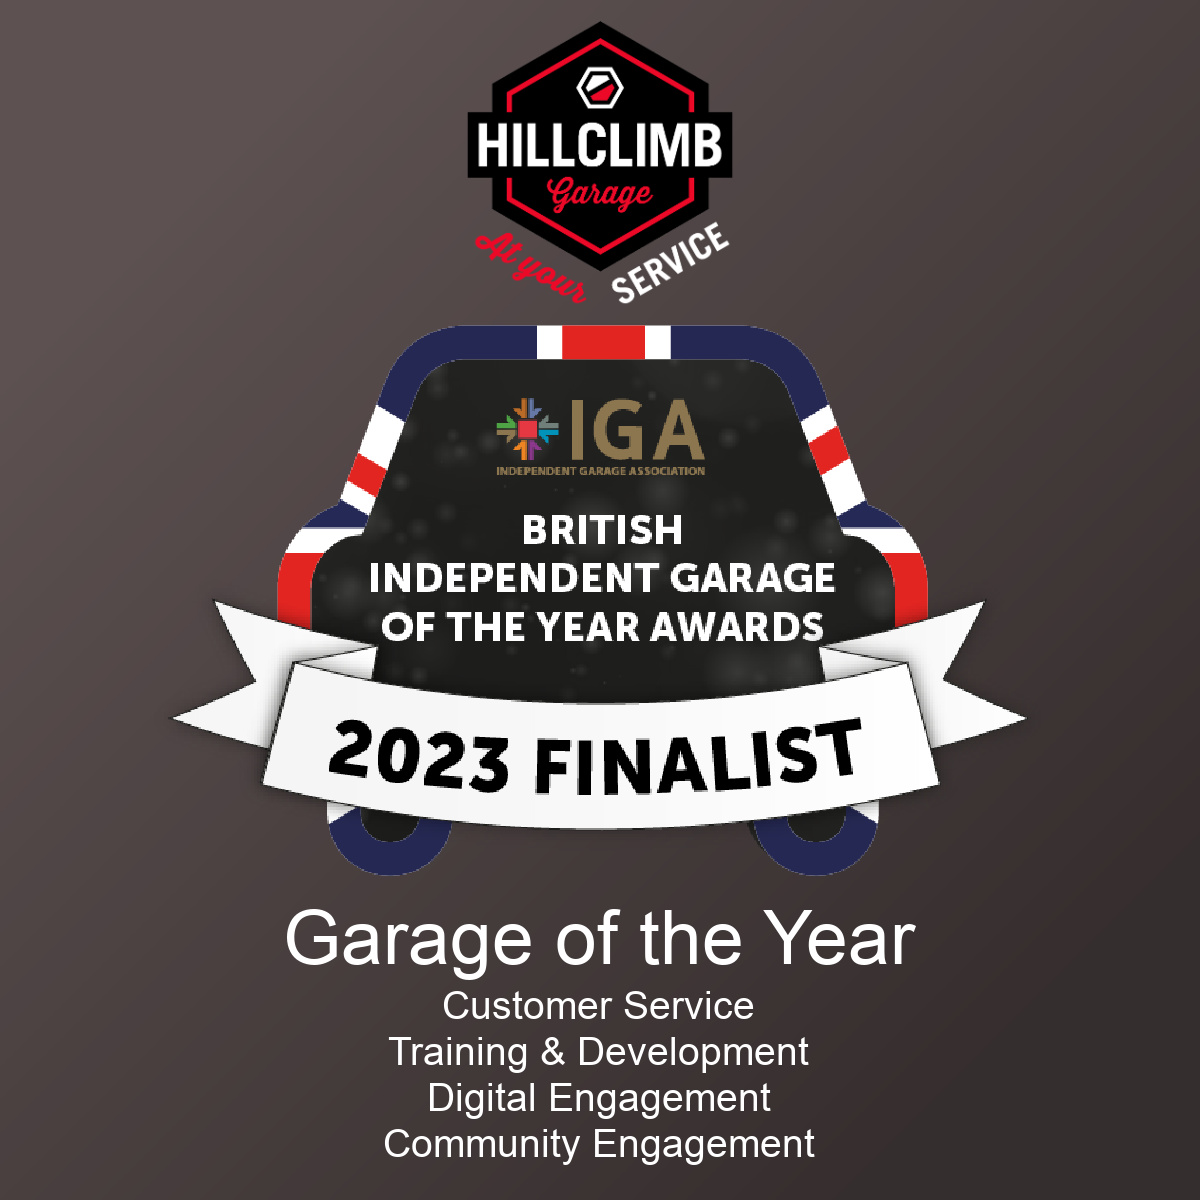 Hillclimb in Finals of British Garage Awards